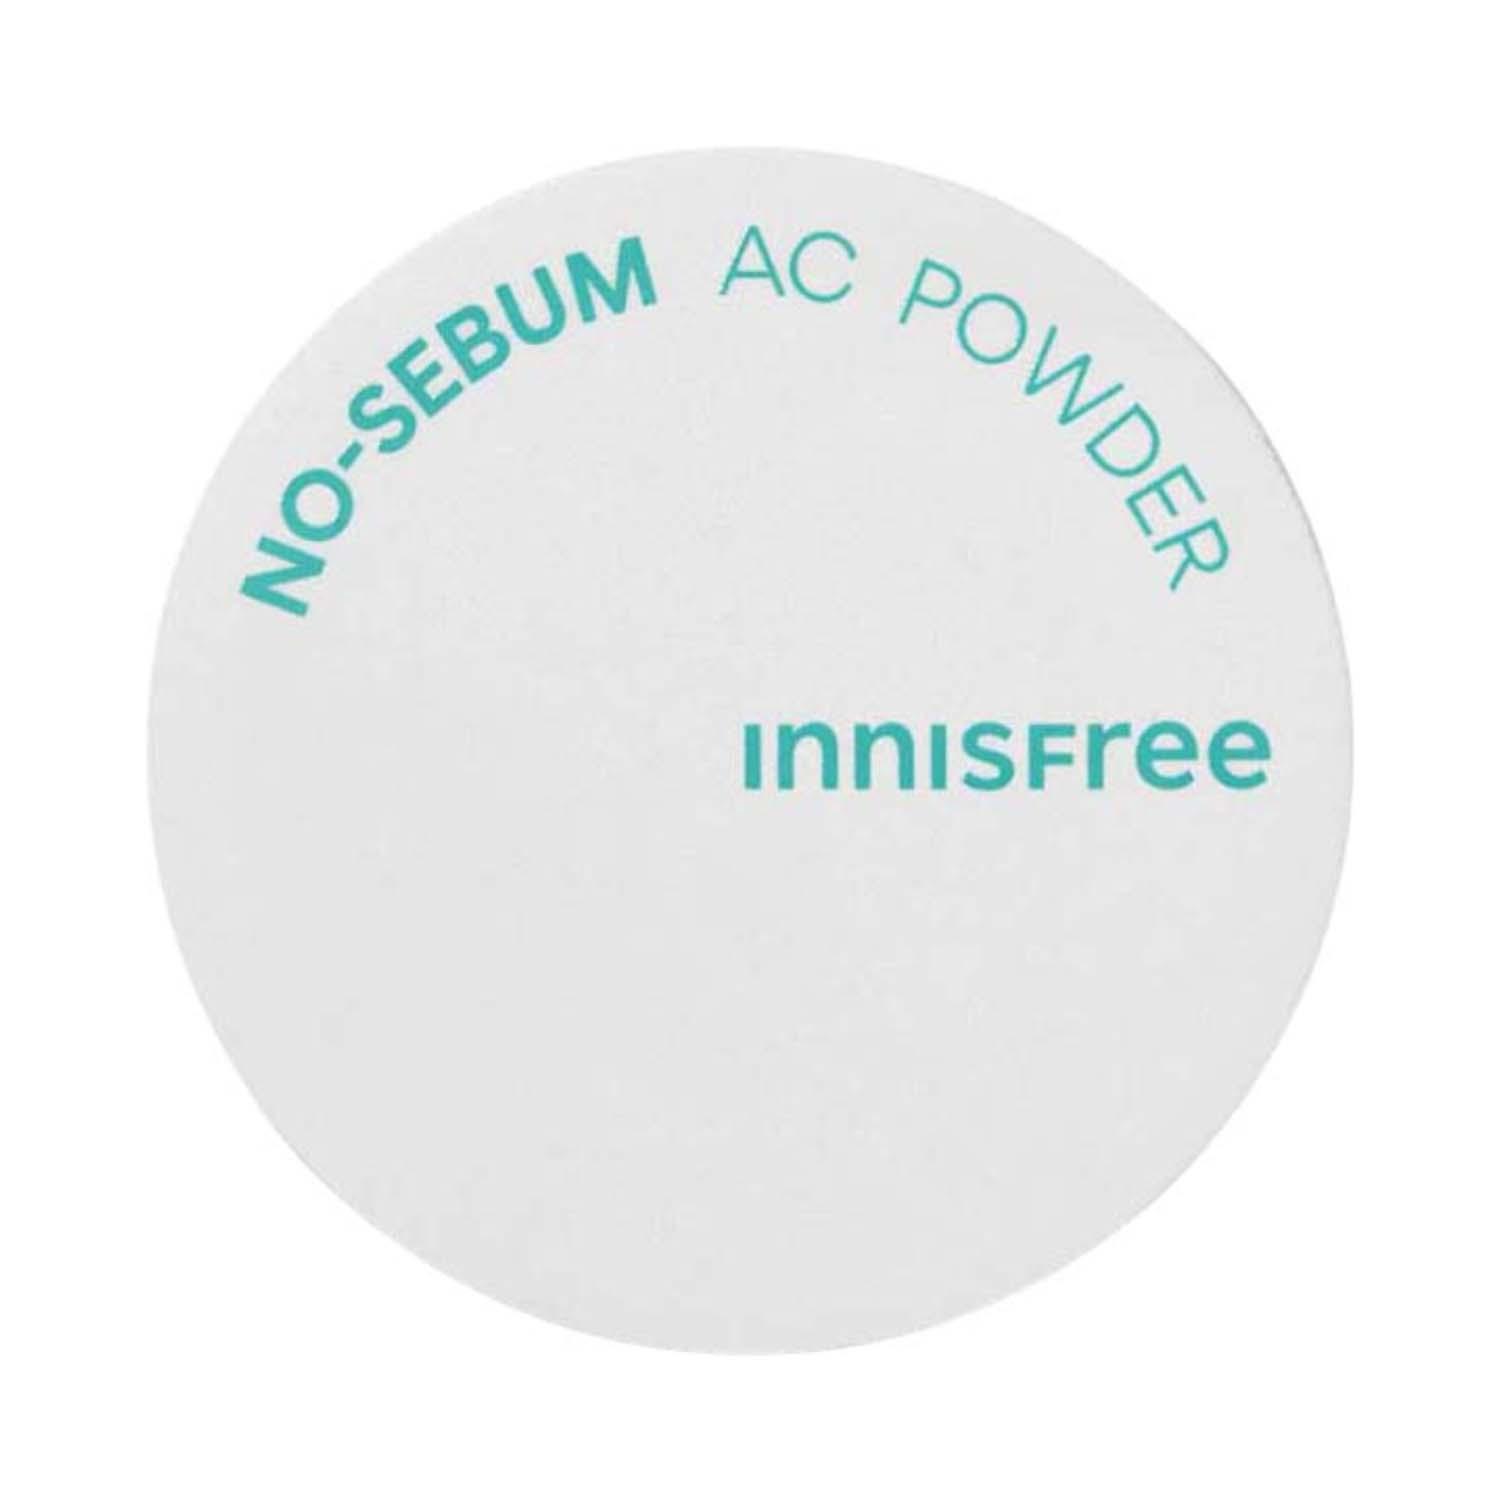 Innisfree No-Sebum AC Powder - White (5 g)